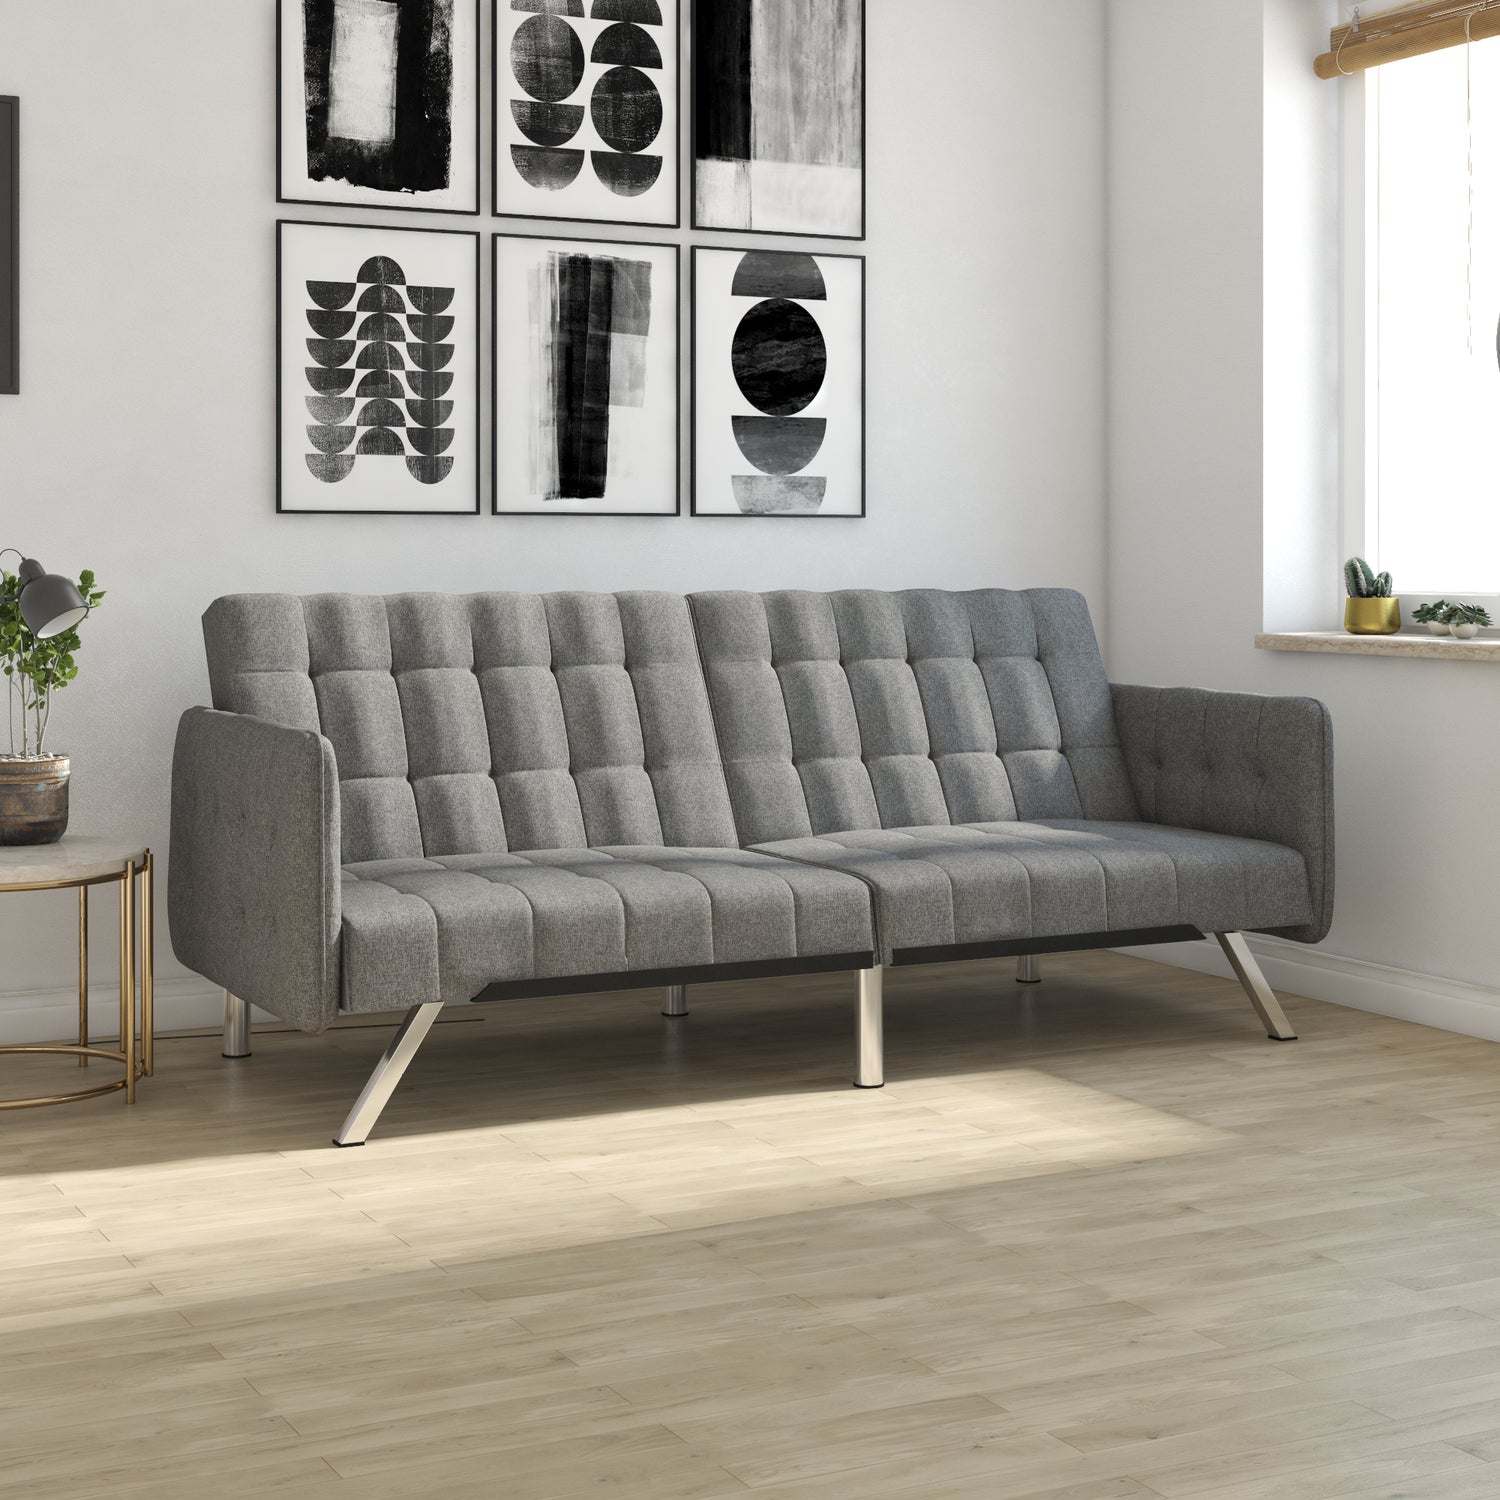 Dorel Home Emily Clic Clac Convertible Sofa Bed Grey-Better Bed Company 